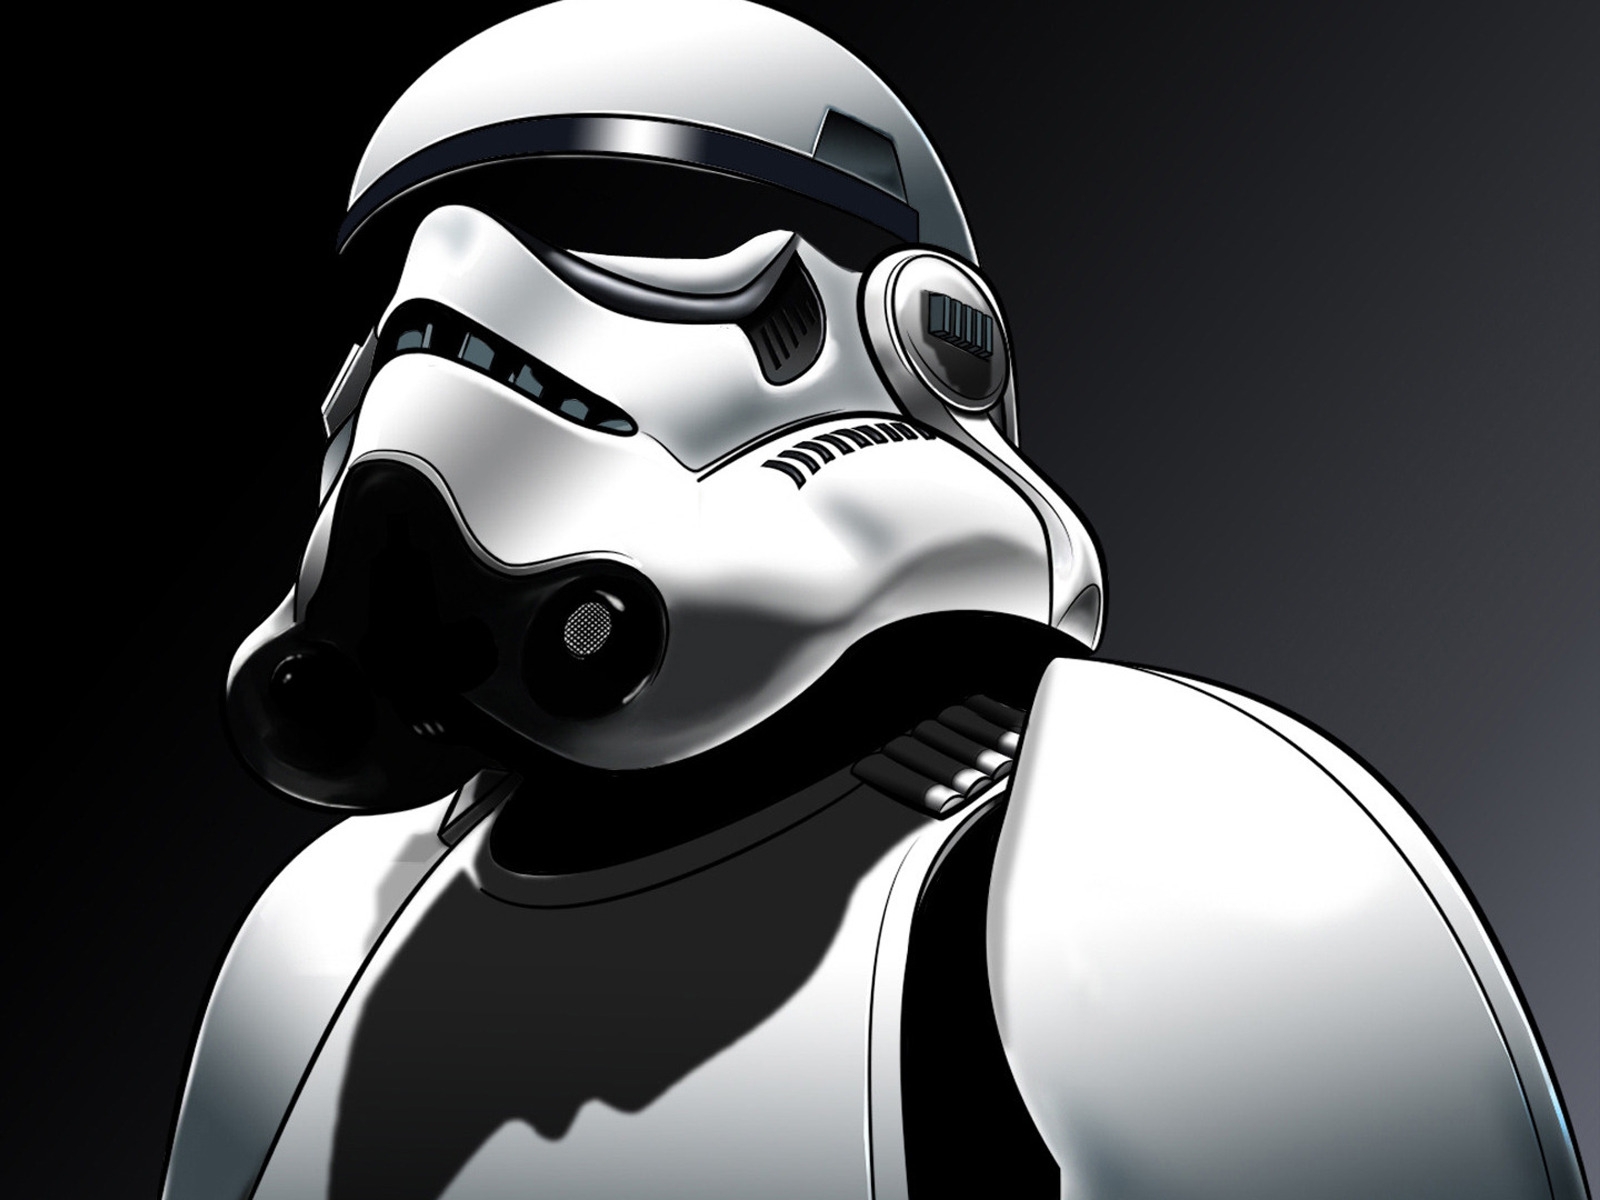 Star Wars Soldier for 1600 x 1200 resolution